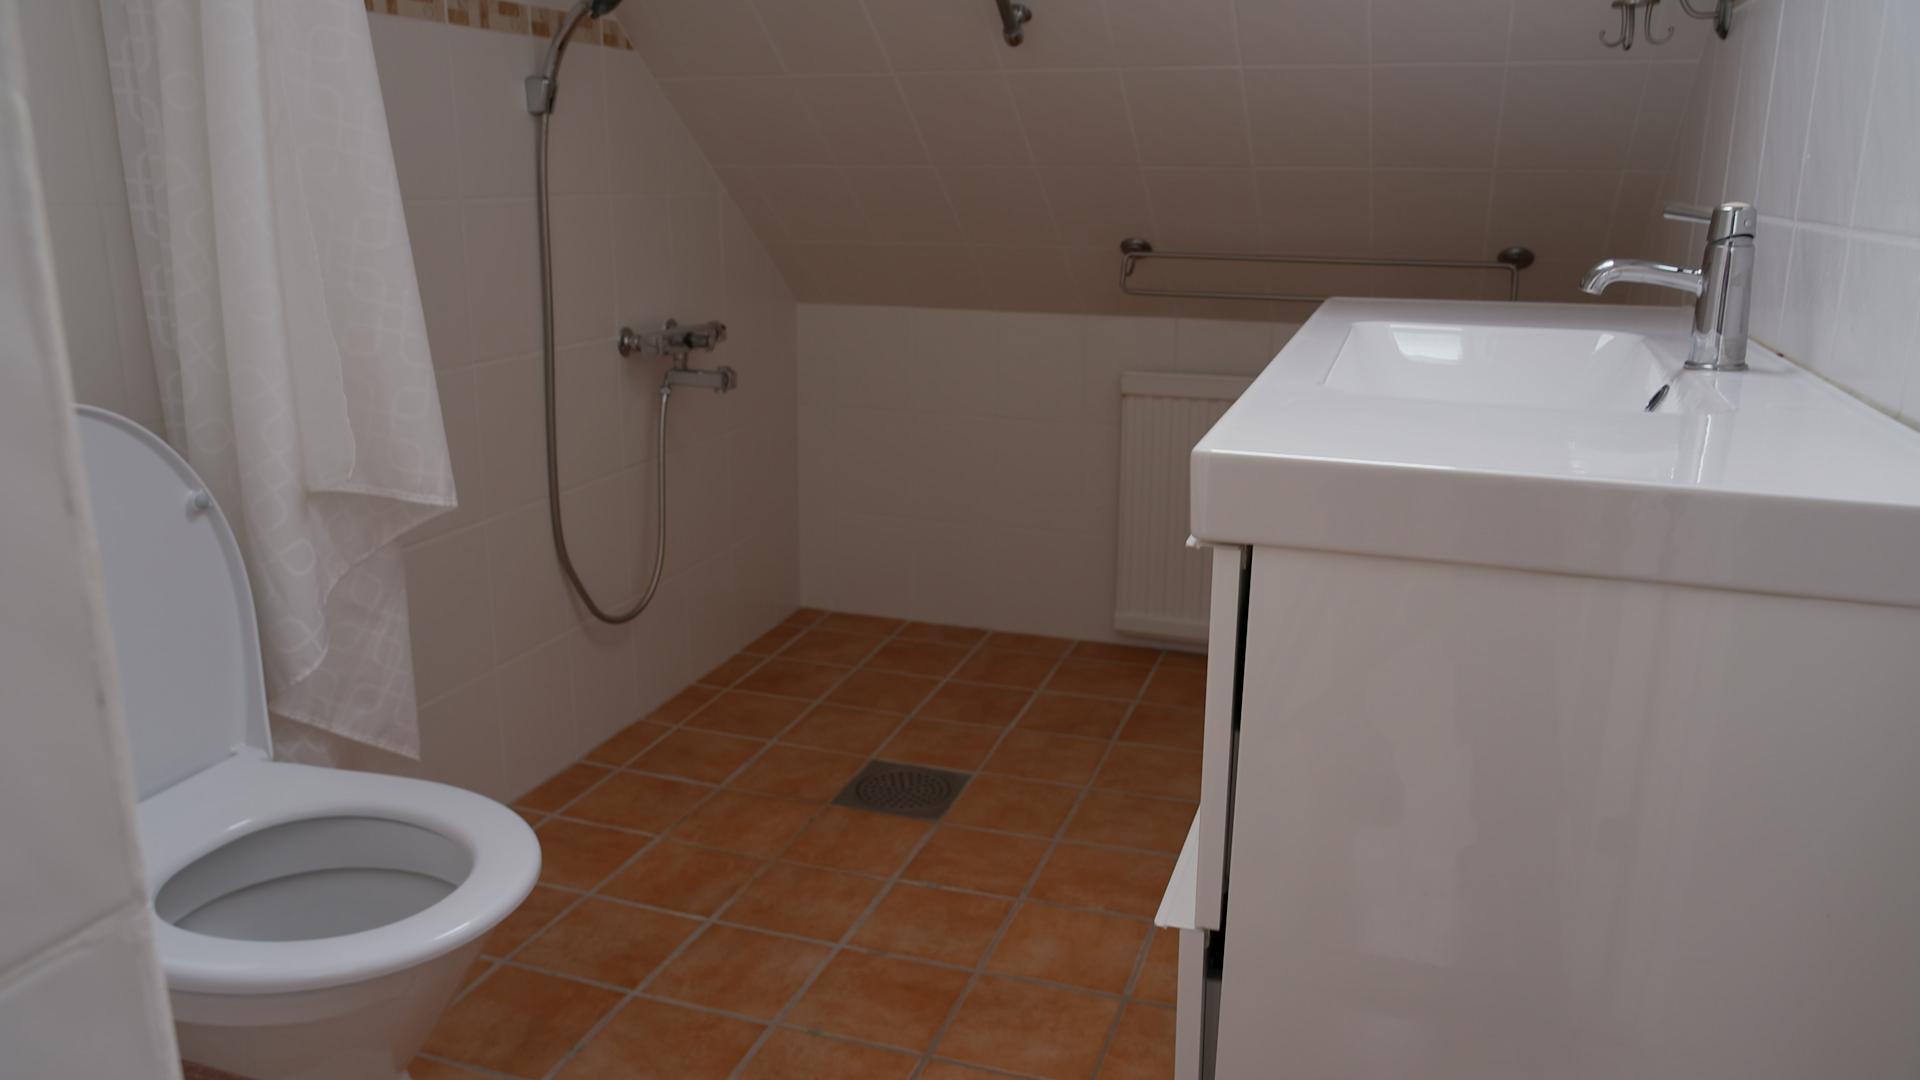 Plumbing fixture, Interior design, Bathroom sink, Property, Building, Fluid, House, Architecture